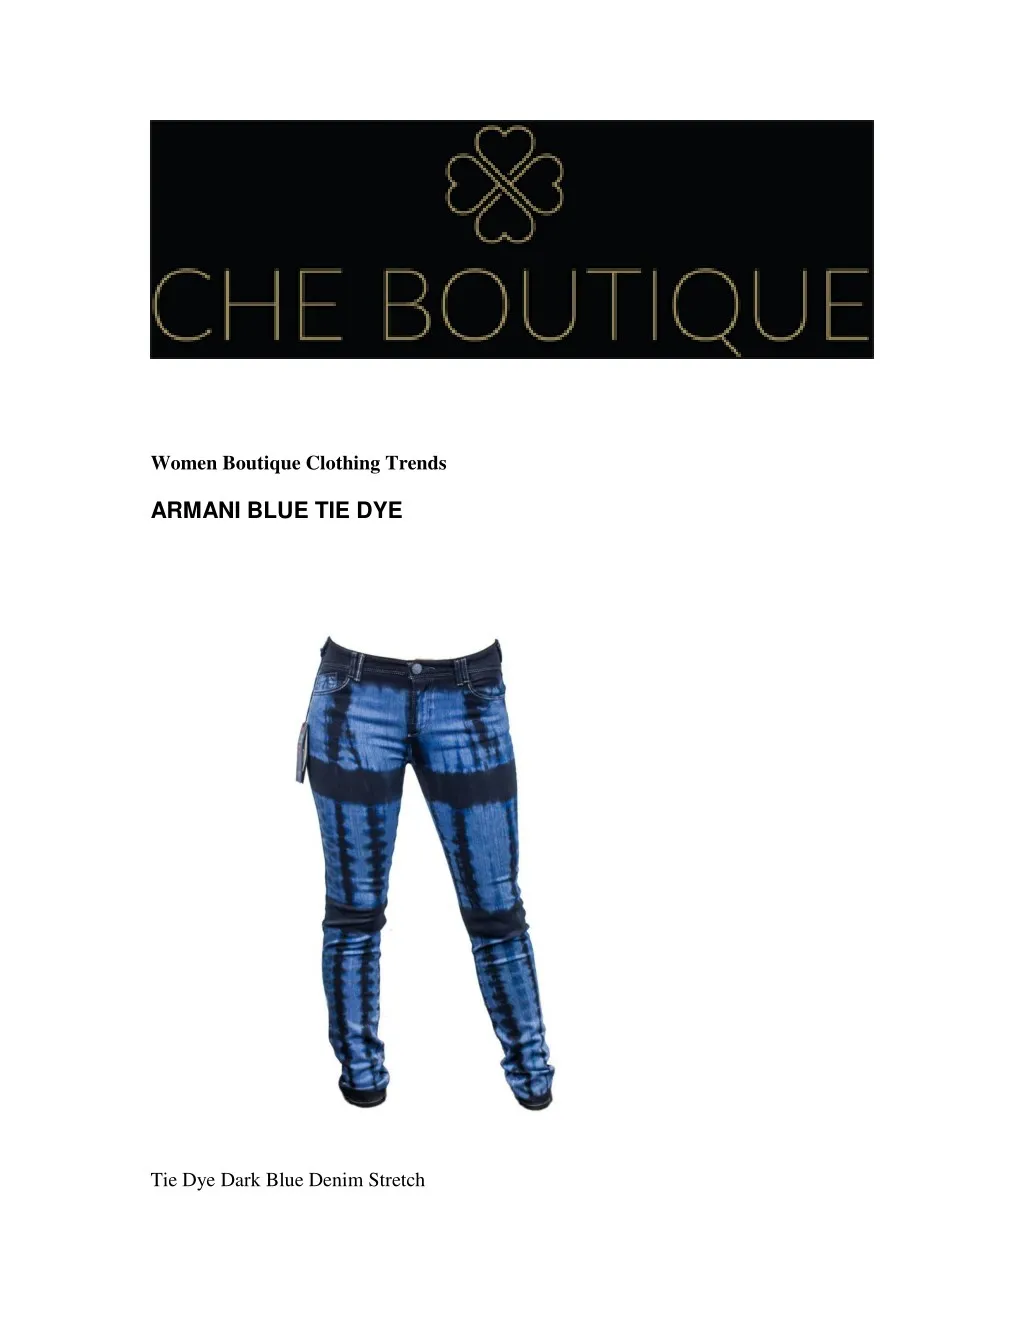 women boutique clothing trends armani blue tie dye n.